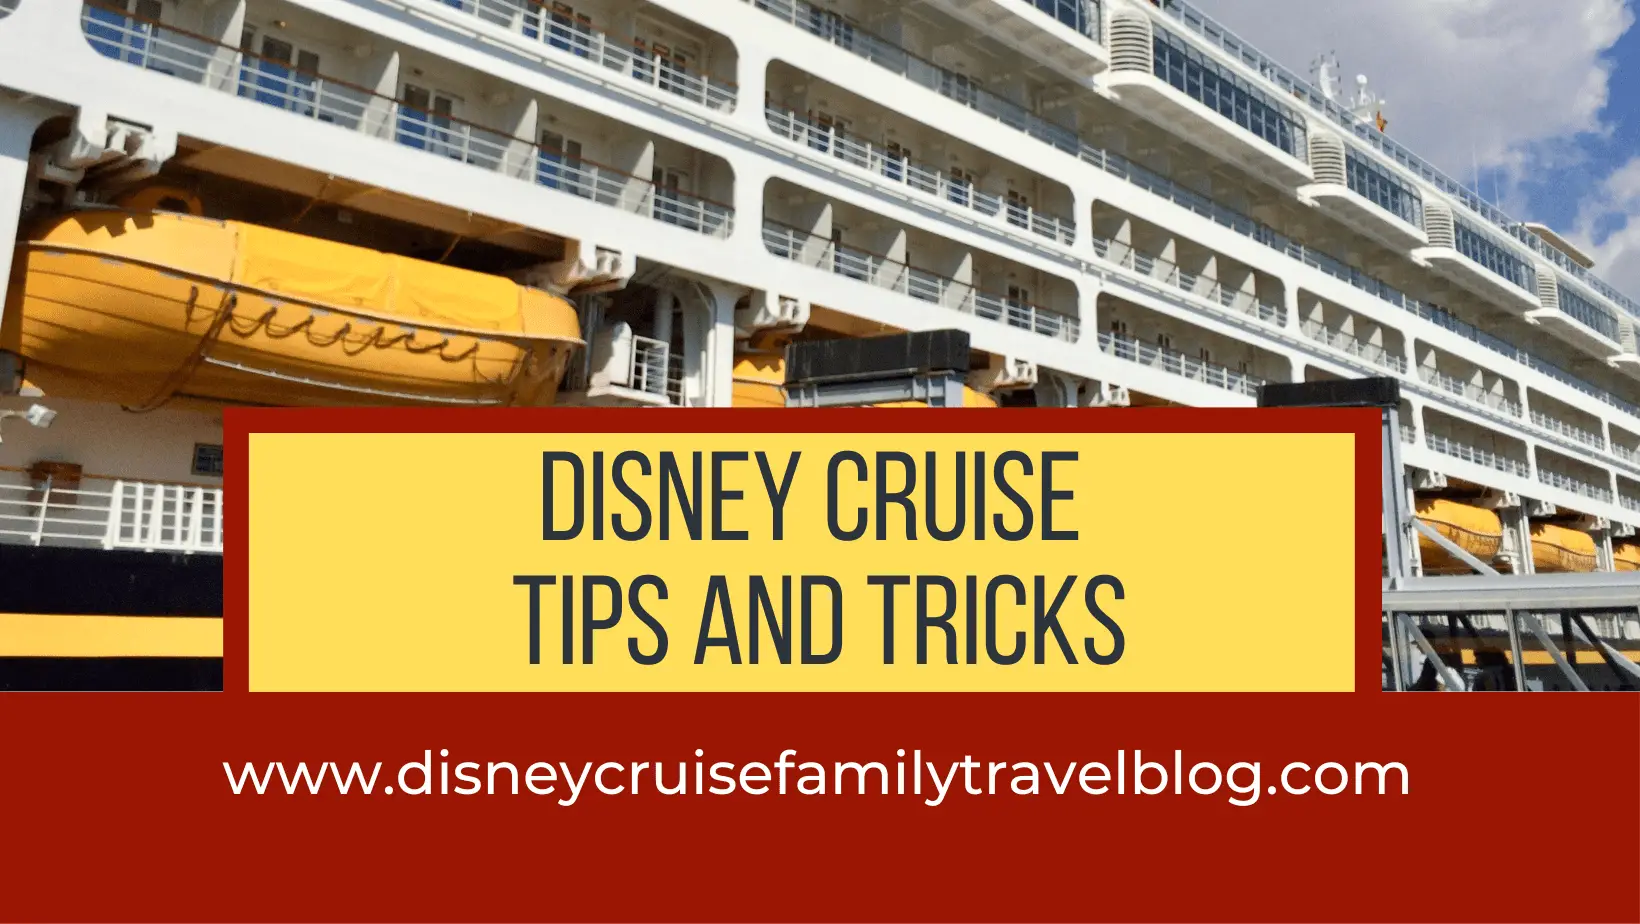 Disney Cruise Tips and Tricks The Disney Cruise Family Travel Blog